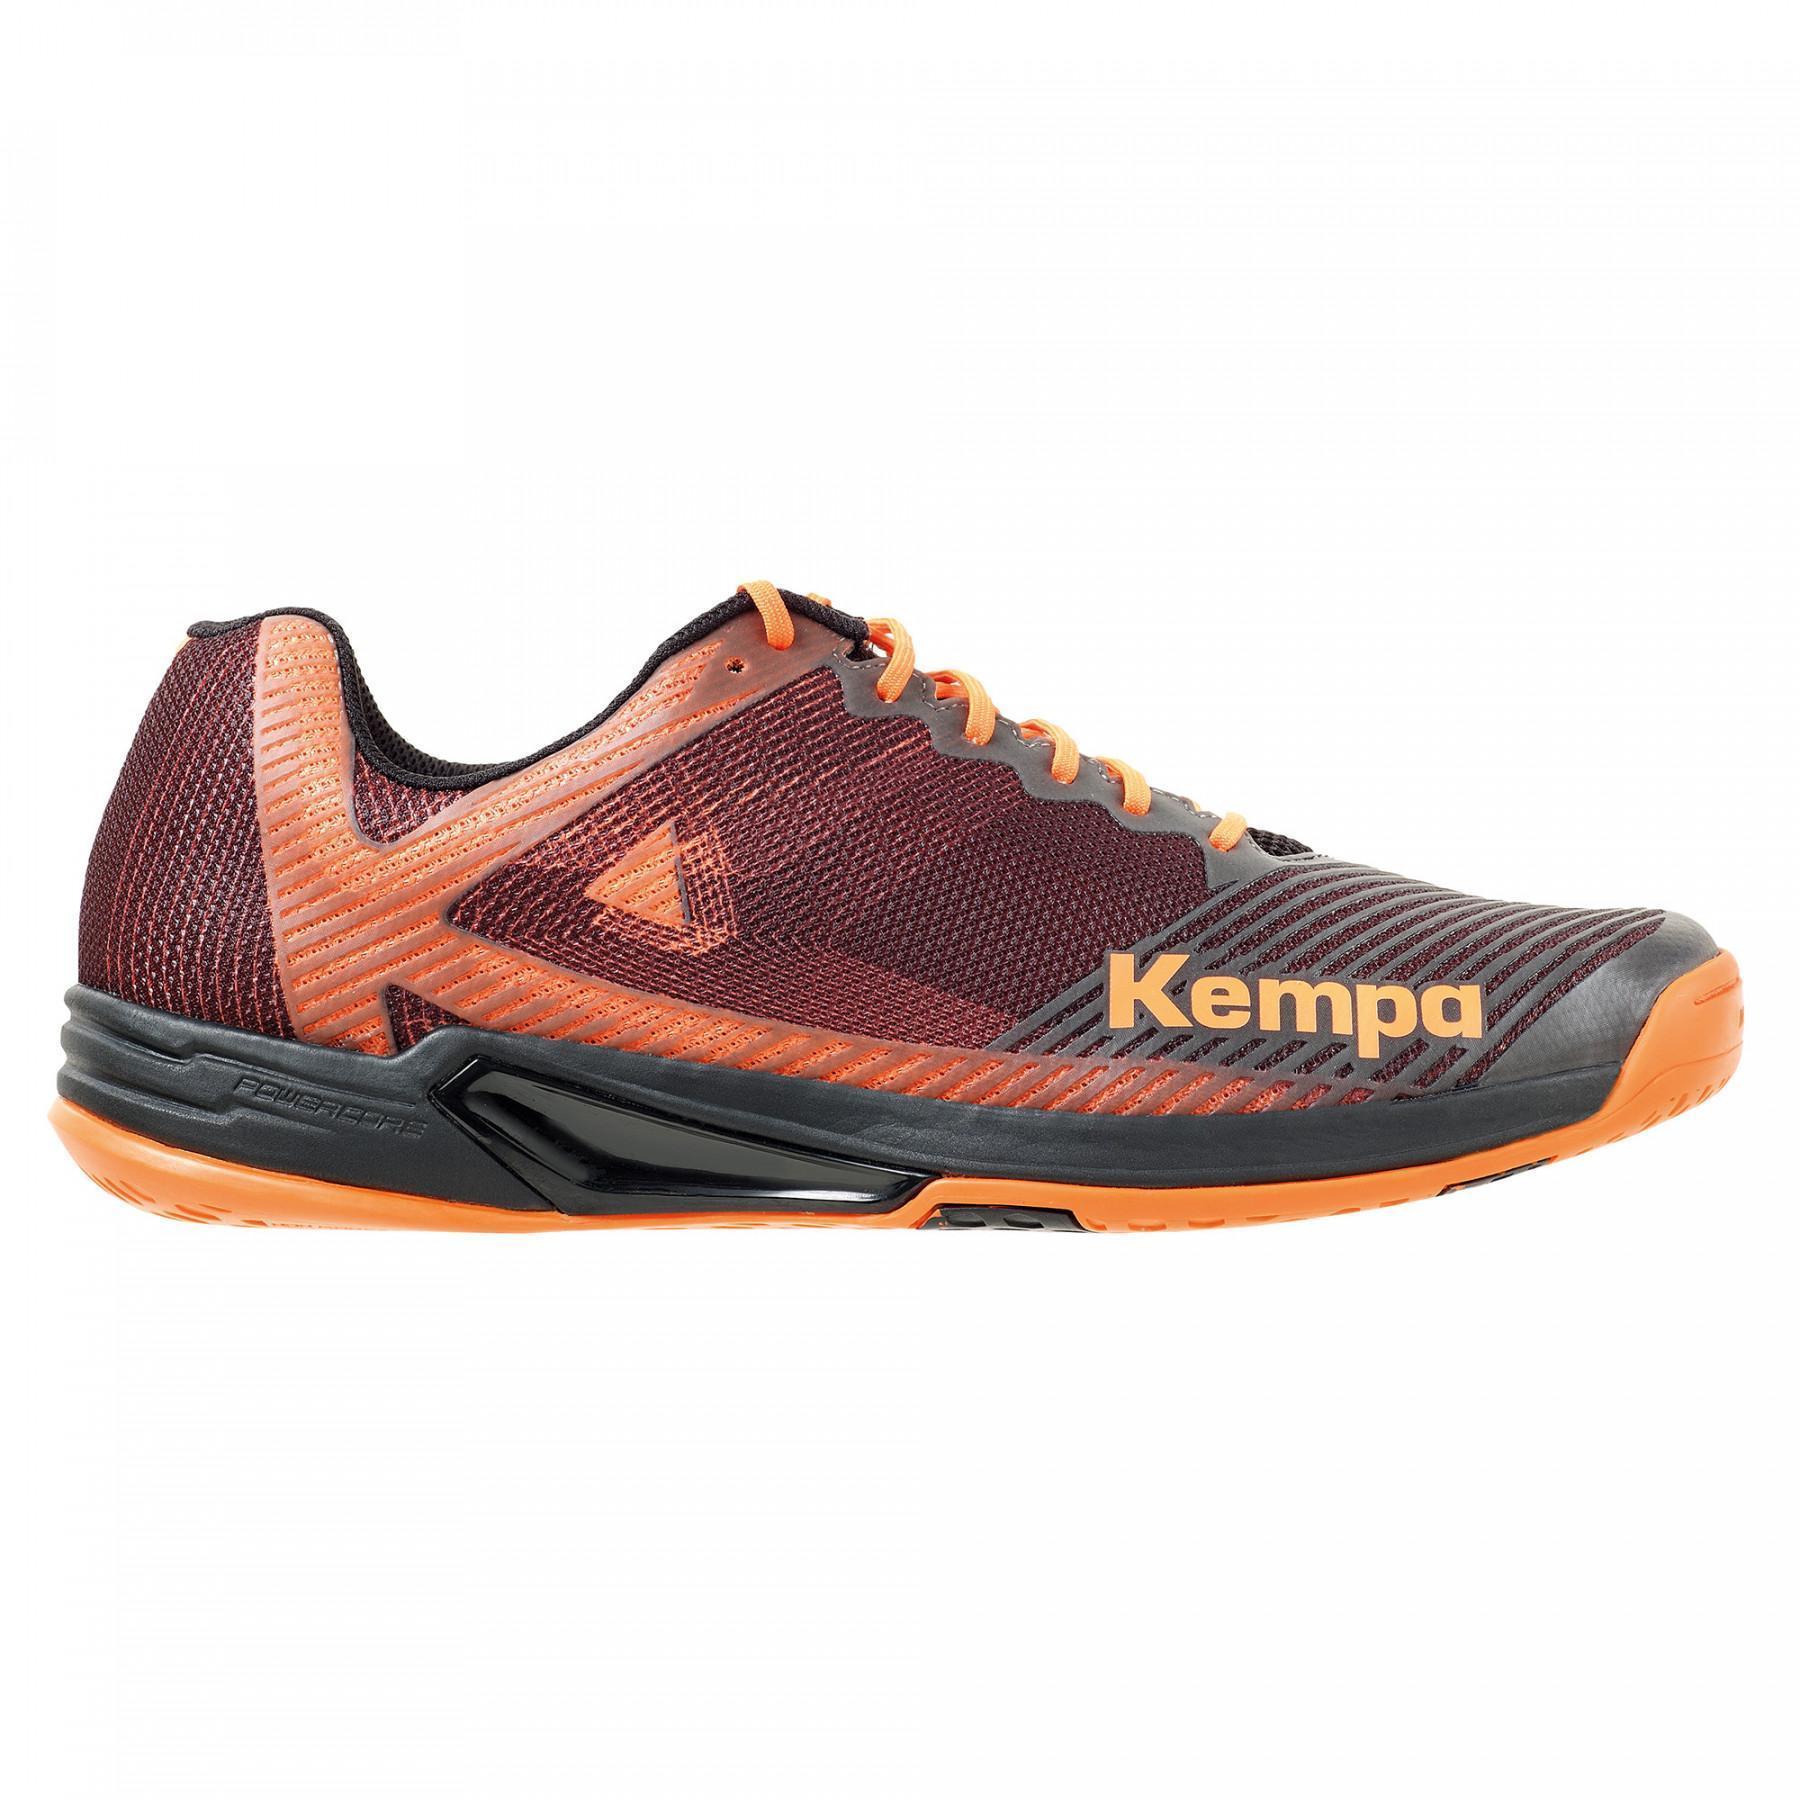 Kempa Men's Wing 2.0 Handball Shoes